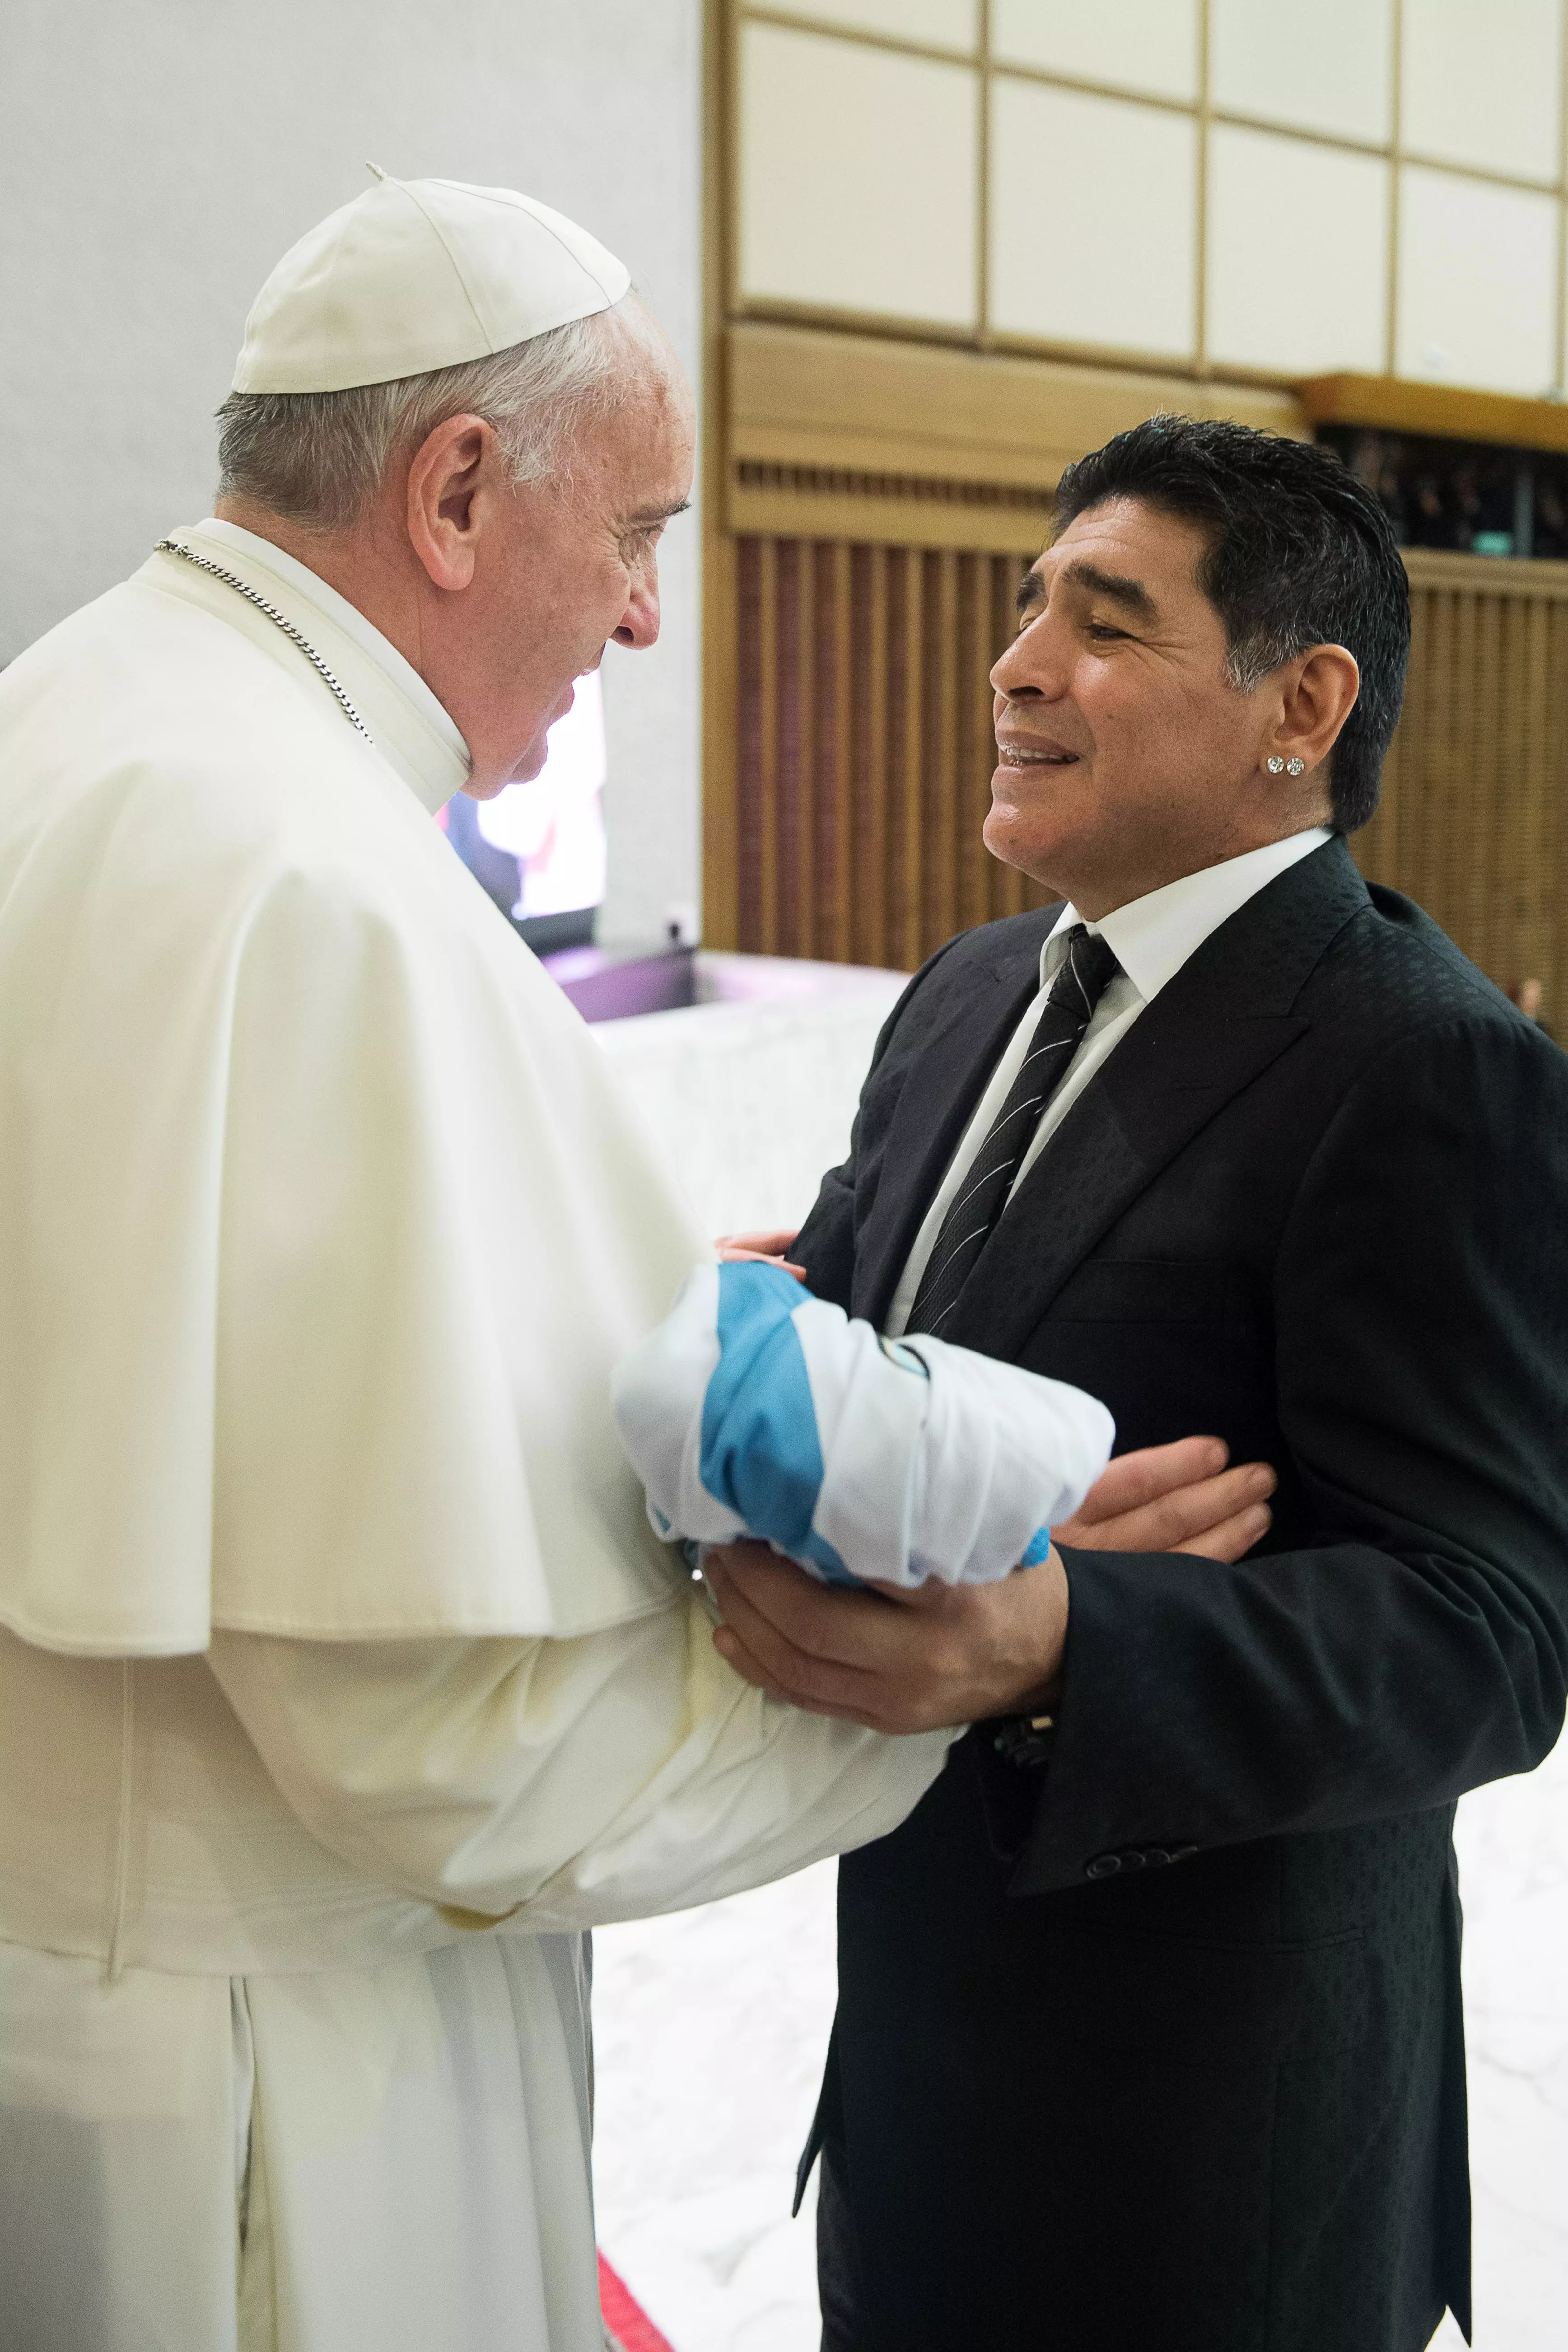 Maradona said Pope Francis restored his faith.